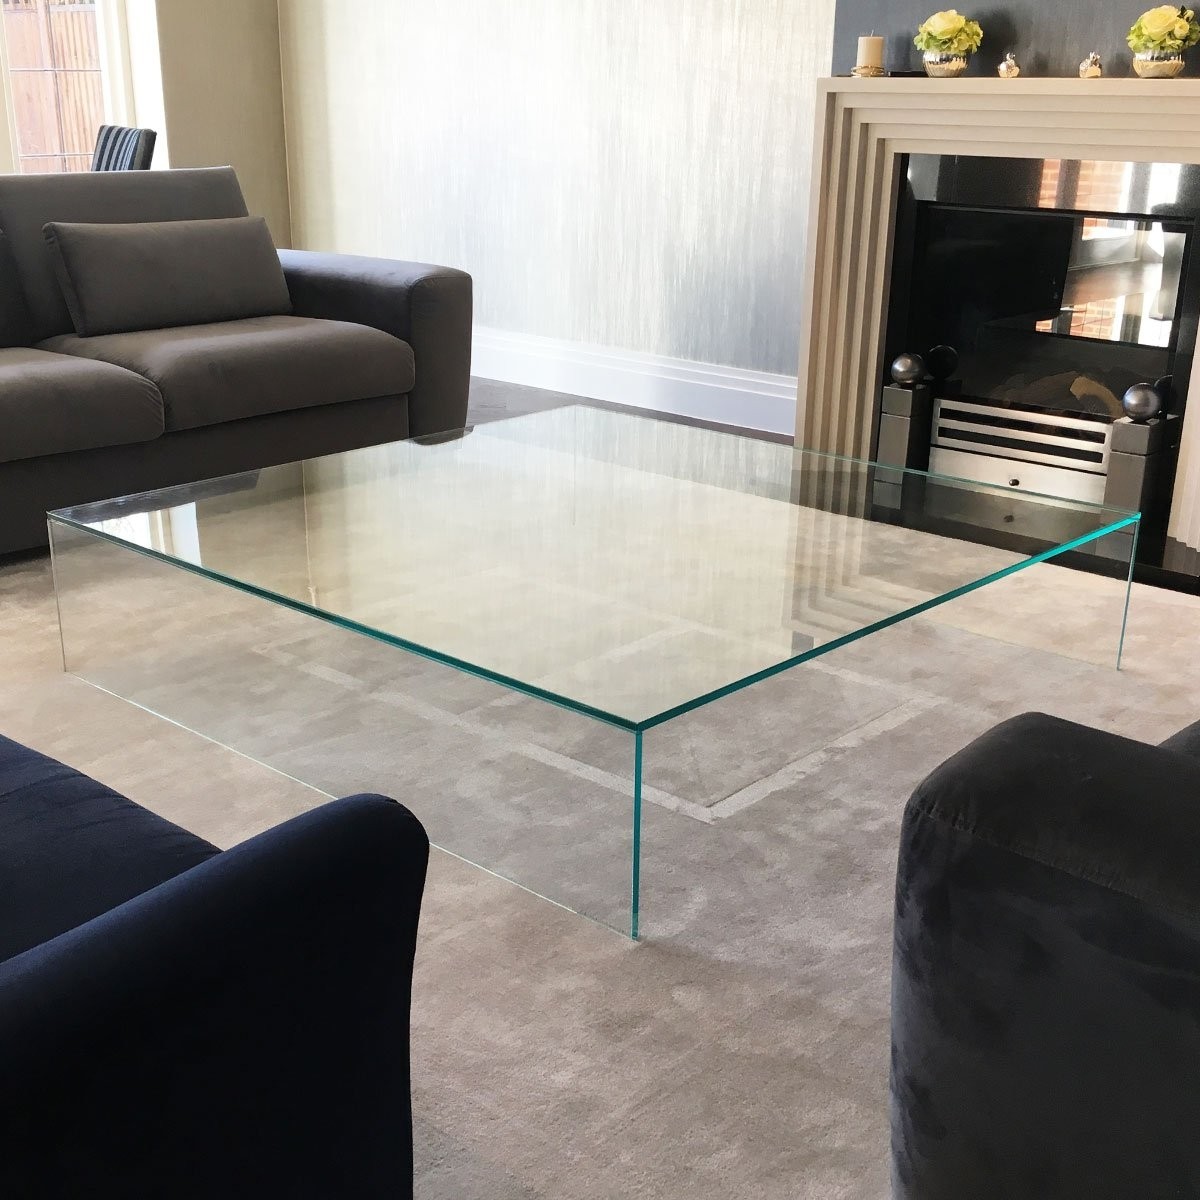 Judd large glass coffee table klarity glass furniture